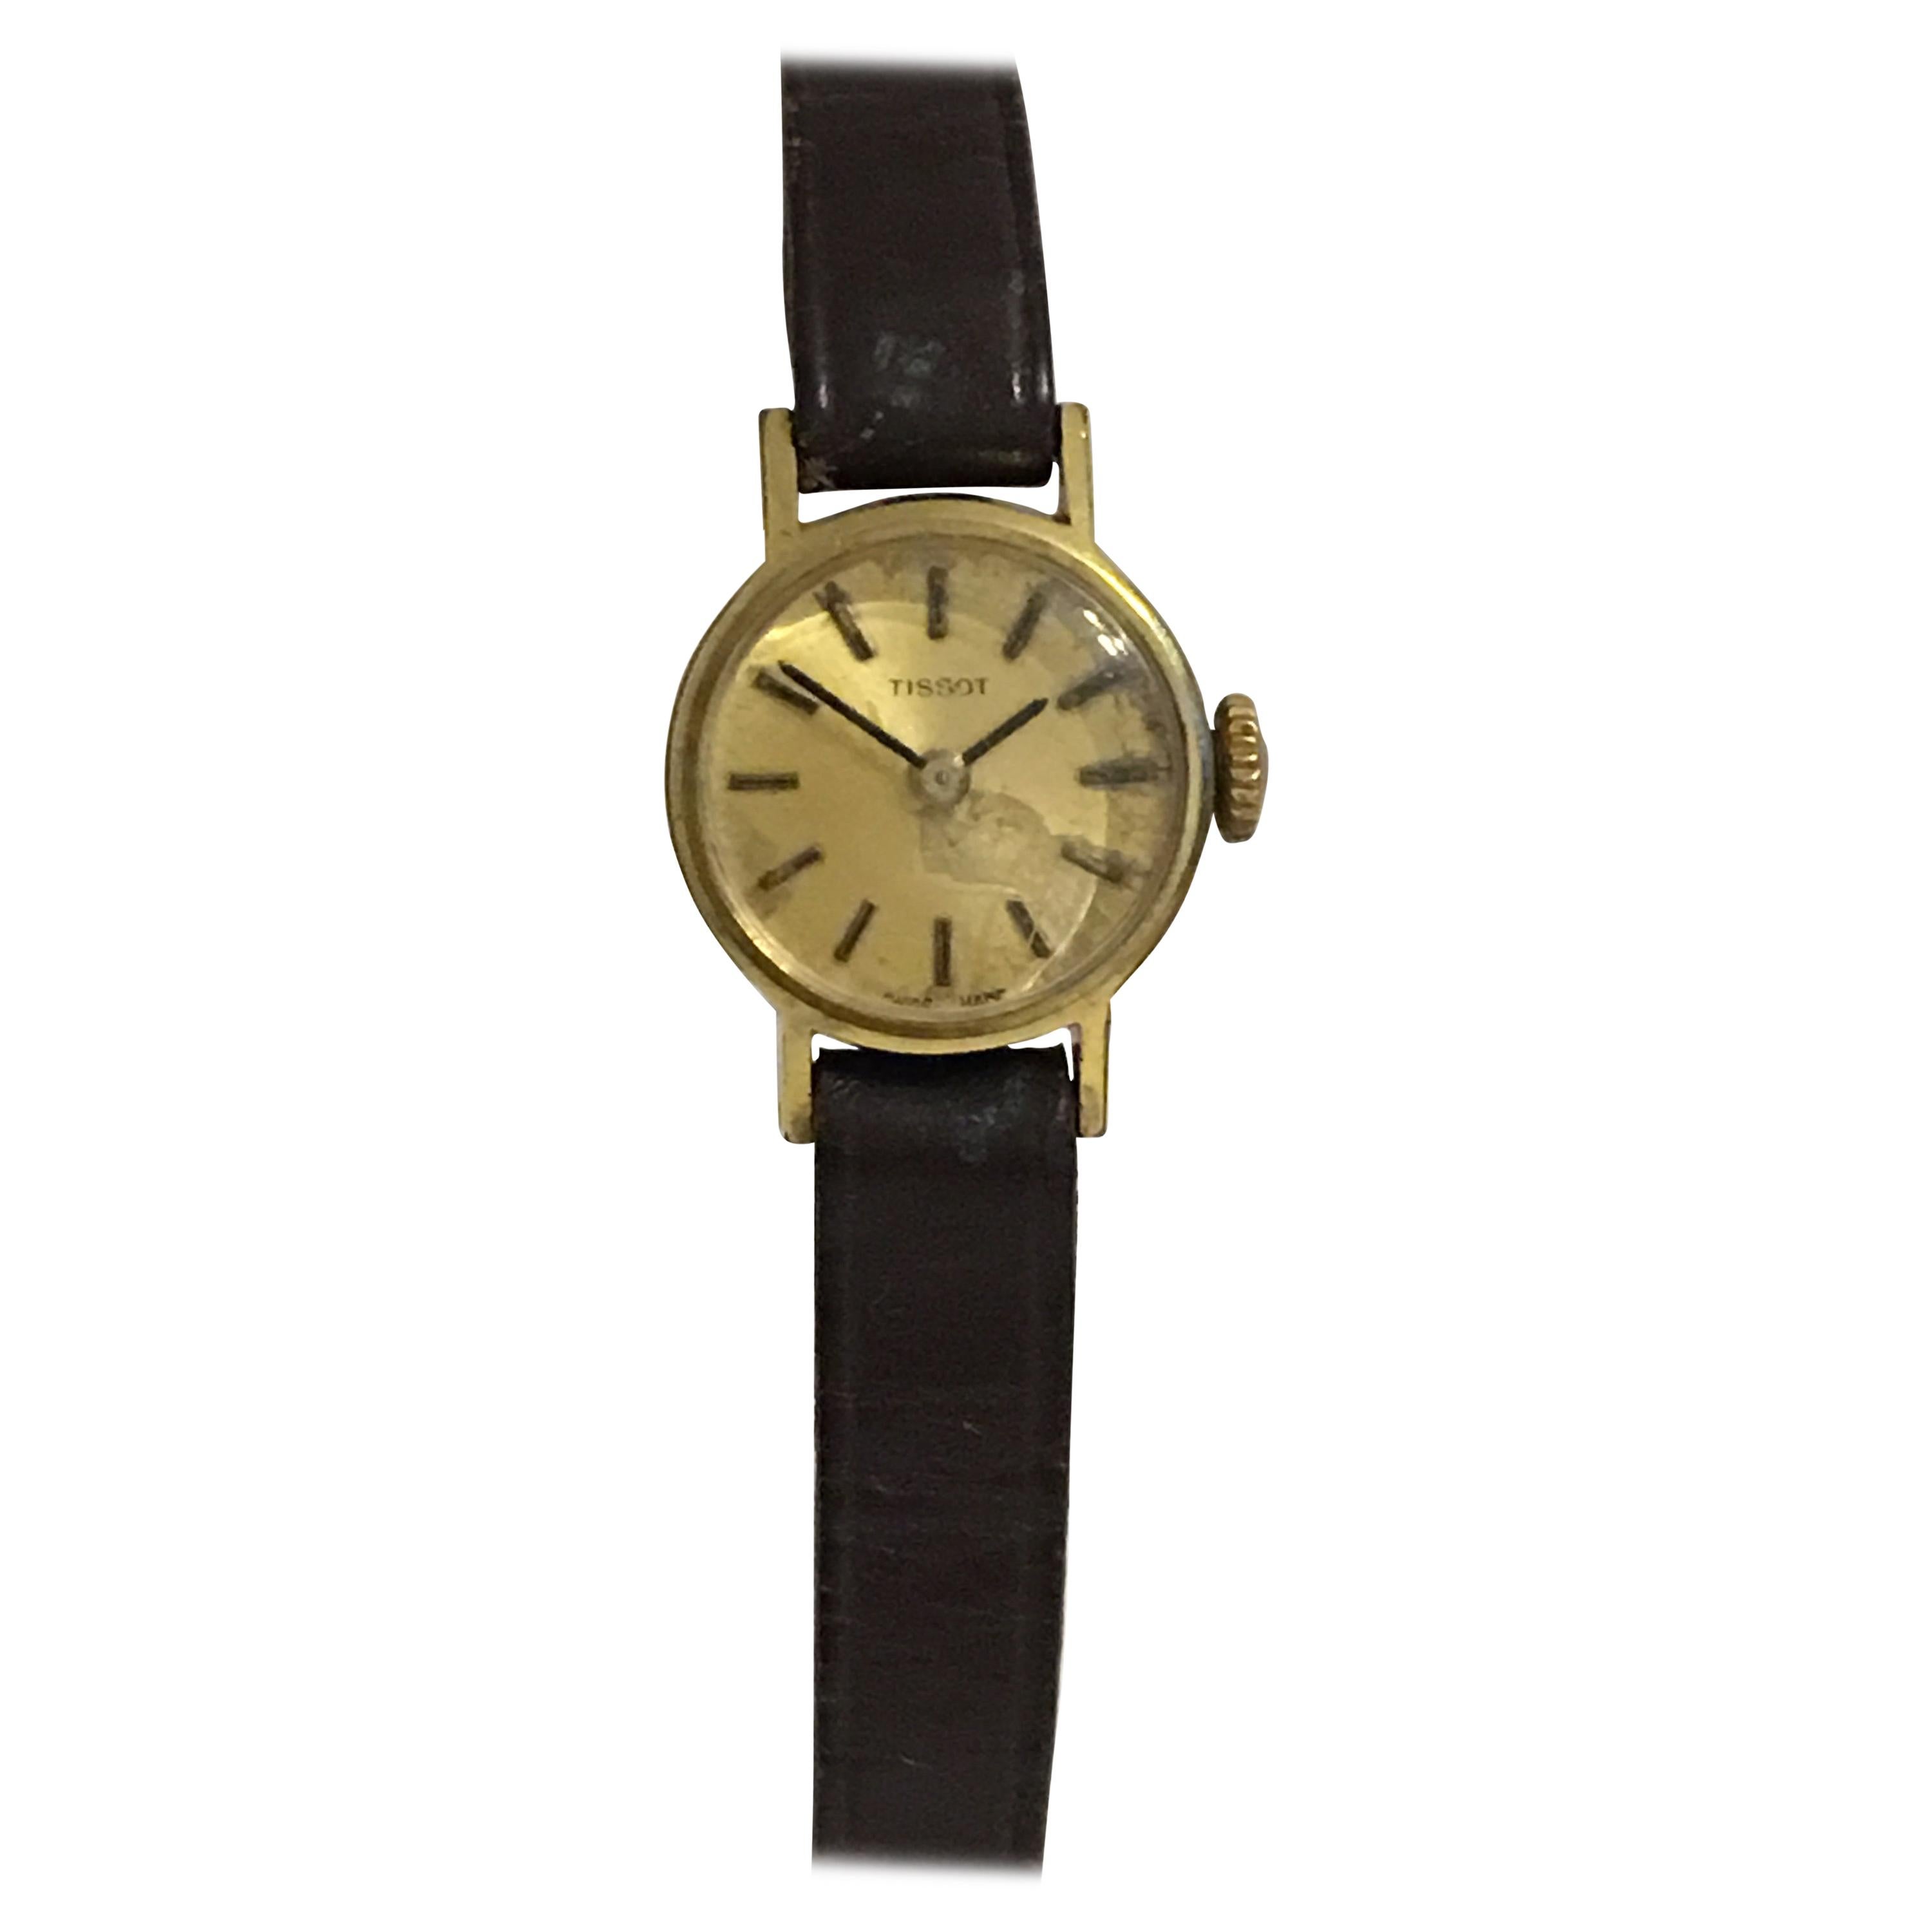 Vintage 1970s Gold-Plated TISSOT Ladies Wristwatch